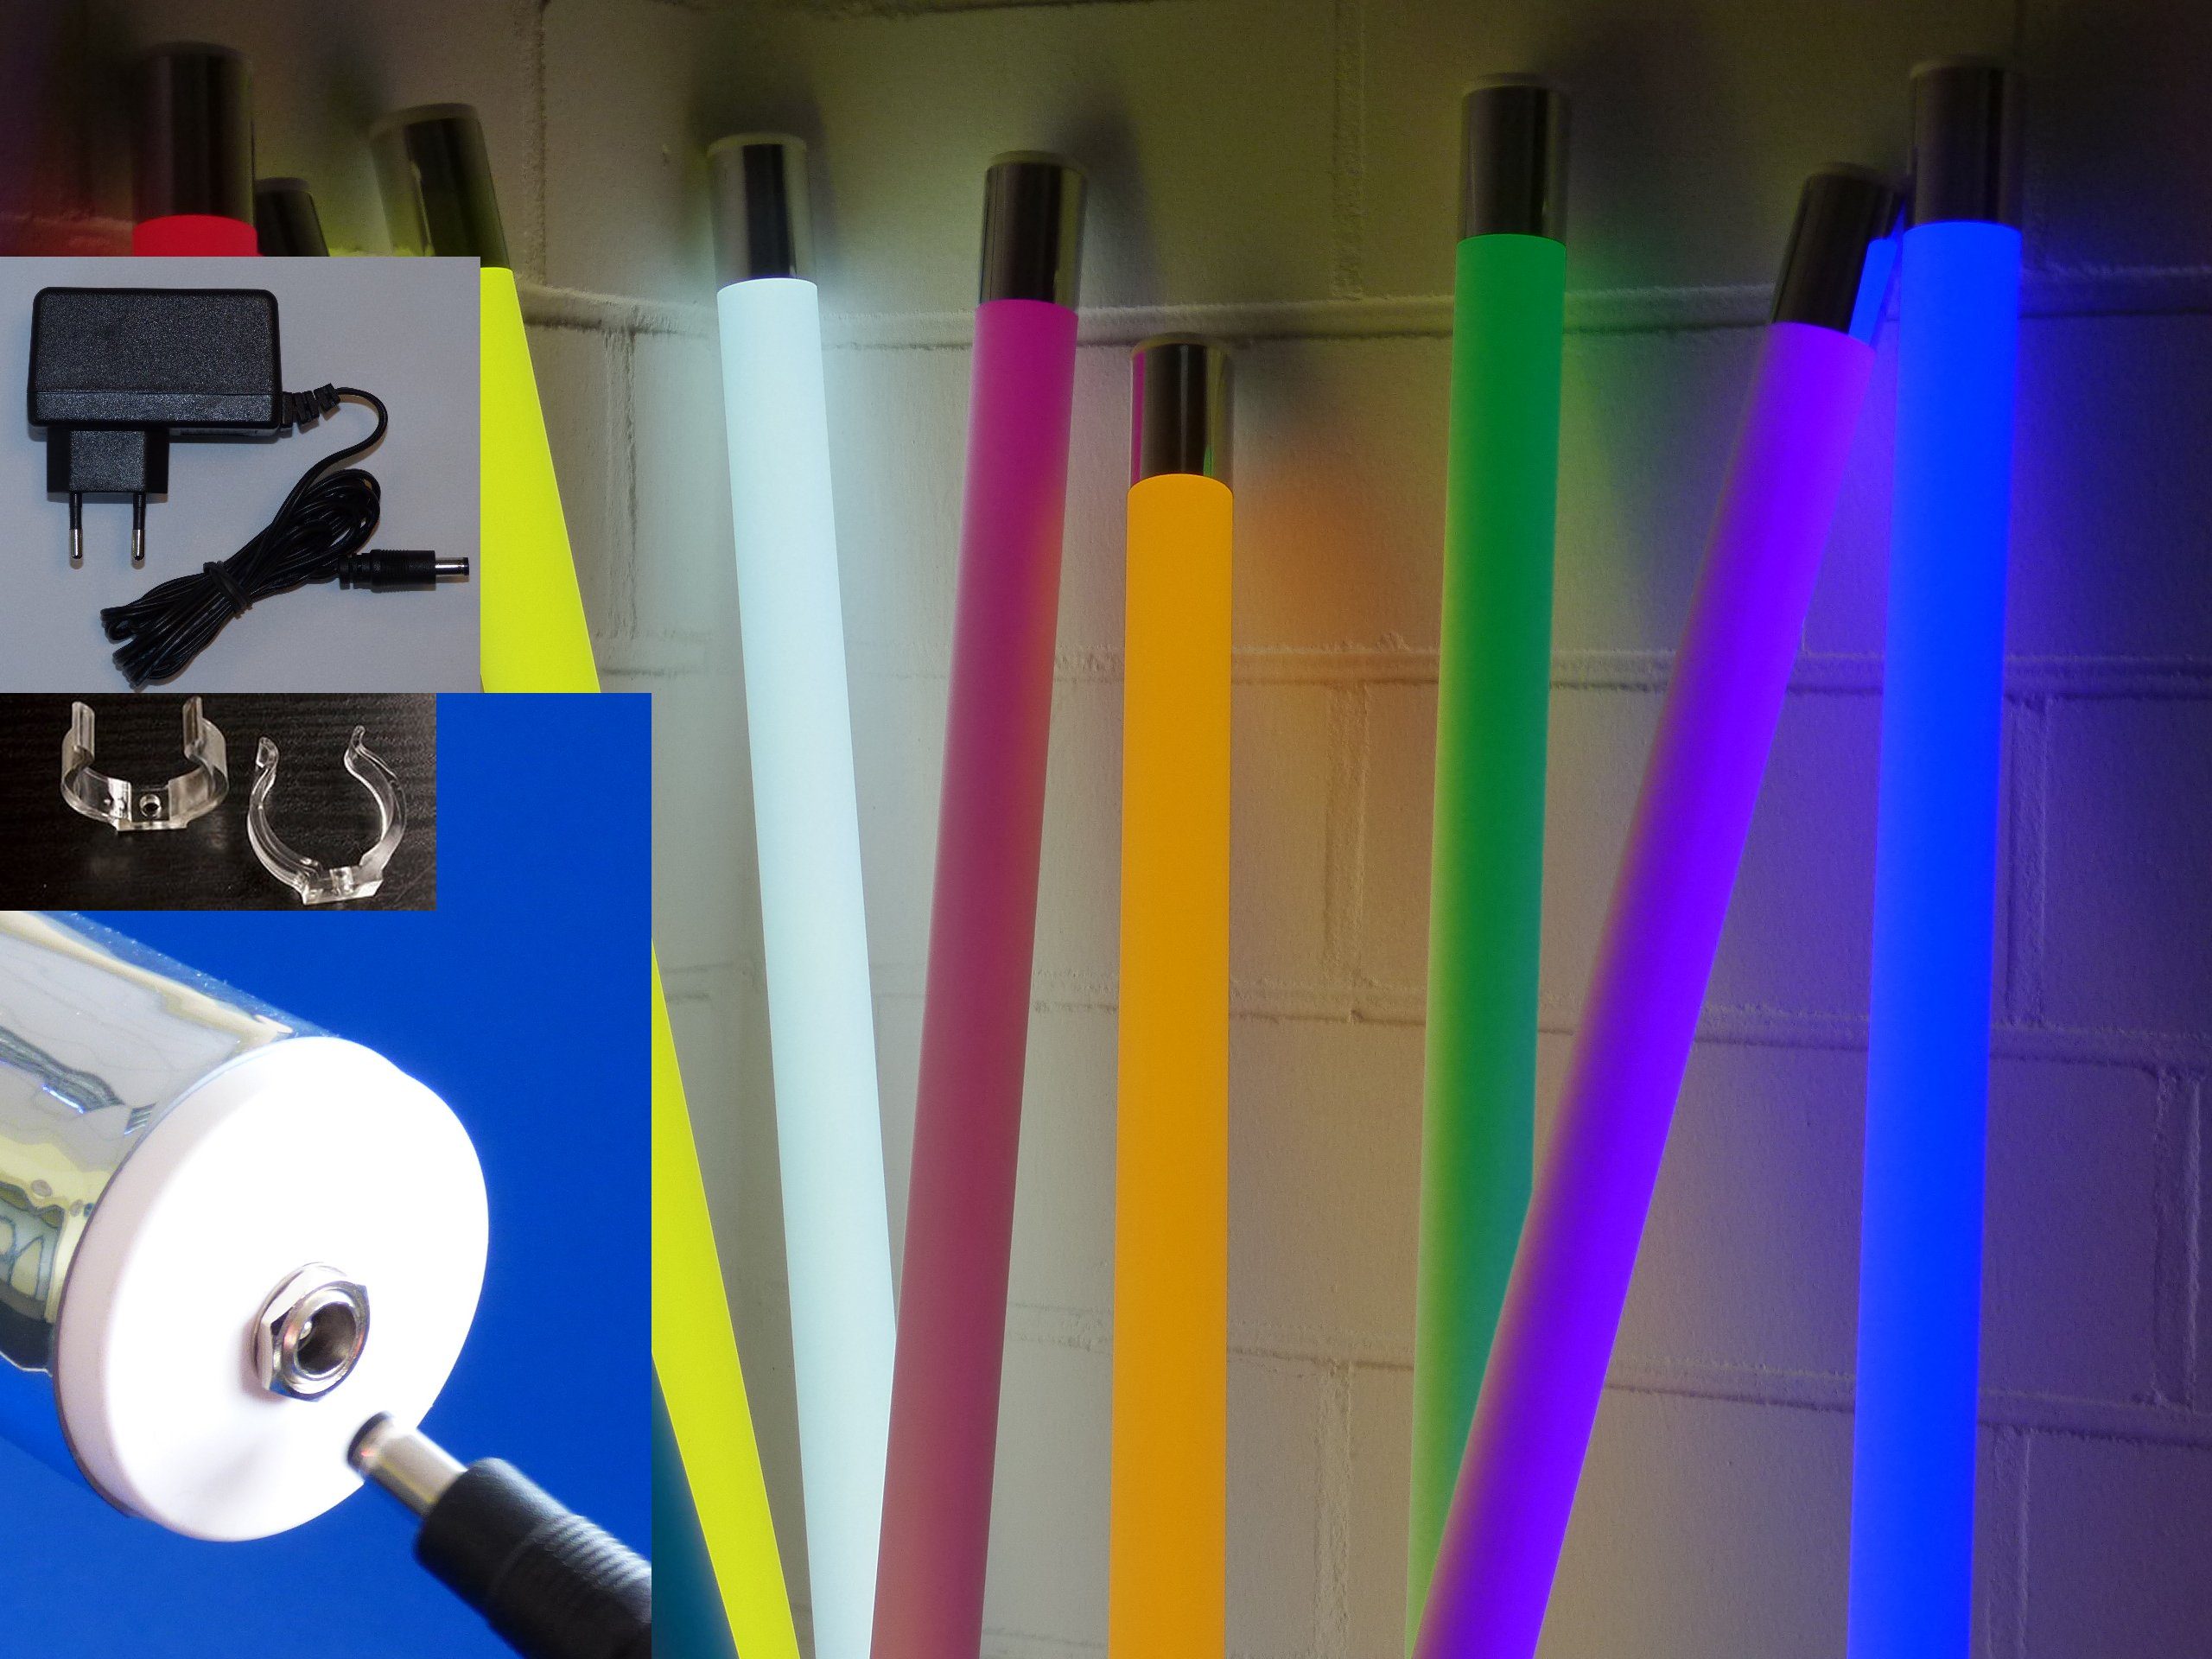 XENON LED Wandleuchte 9739 LED RGB Leuchtstab 12 Volt 1,23m WIFI - APP Steuerung, LED Band (Stripes), Netzteil, Lieferung inklusive 2 Klammern zur Befestigung an Wand oder Decke.